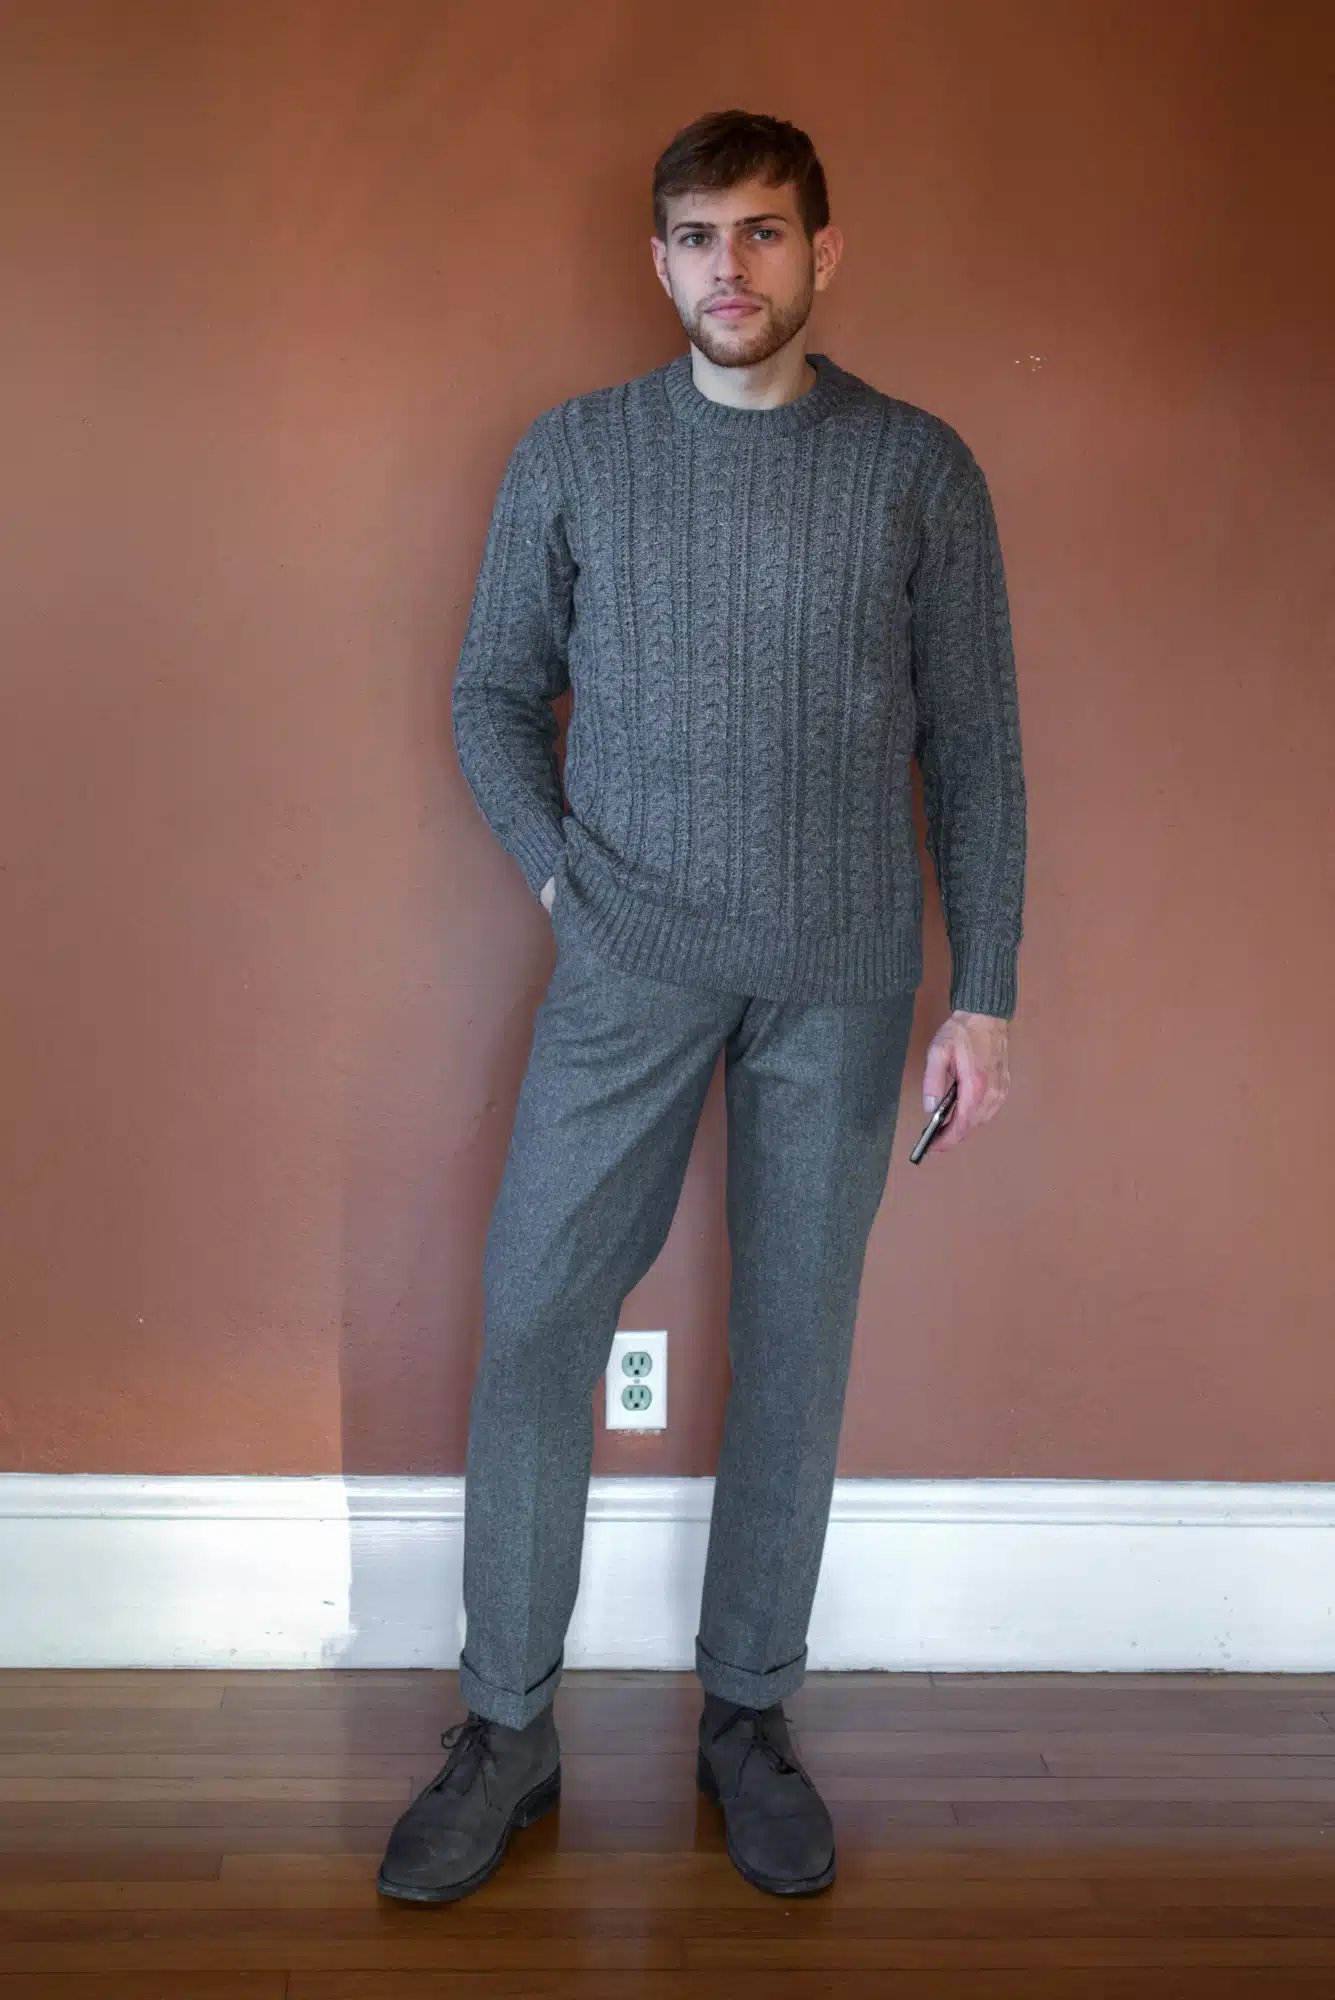 Ryan in Medium grey monochromatic outfit